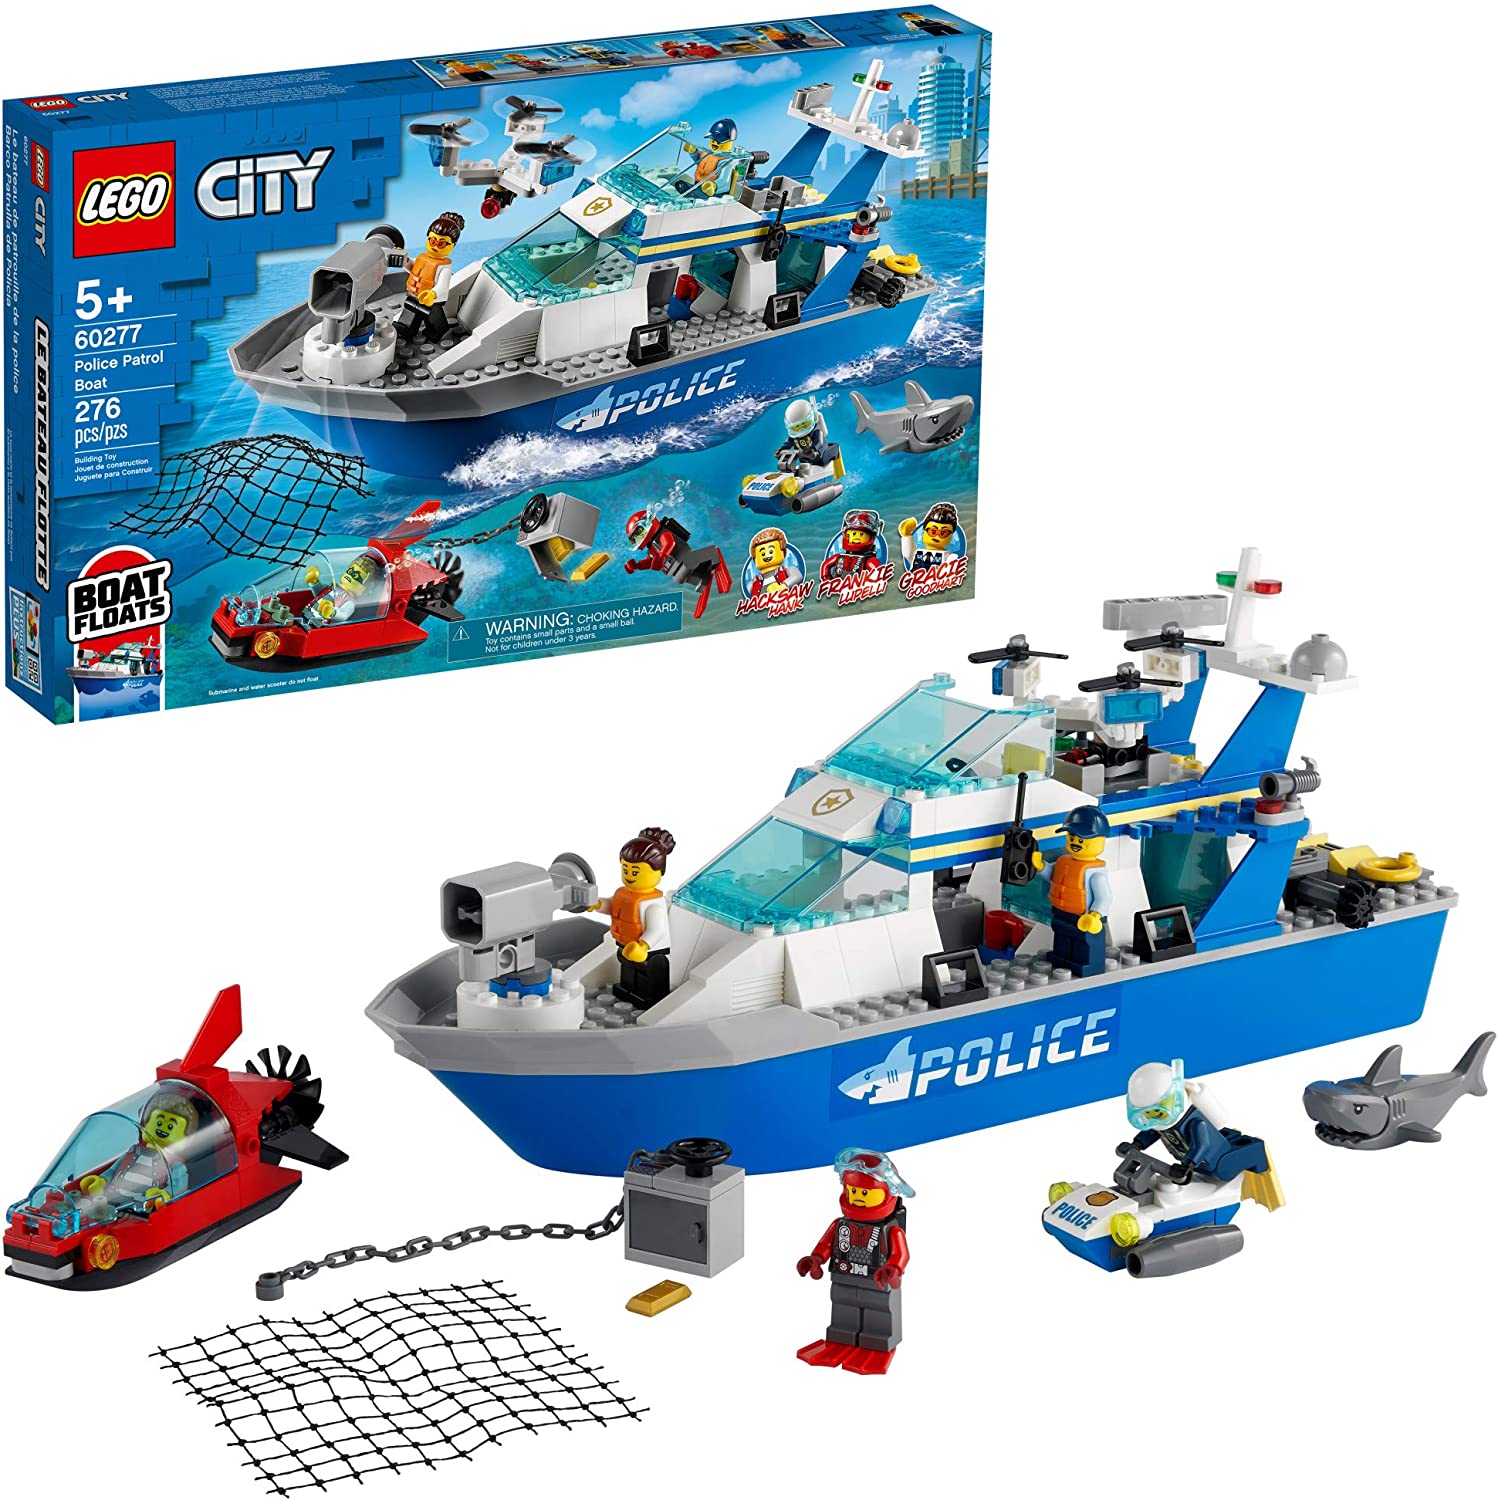 276 pc. LEGO City Police Patrol Boat 60277 Building Kit $48.49 + Free Shipping